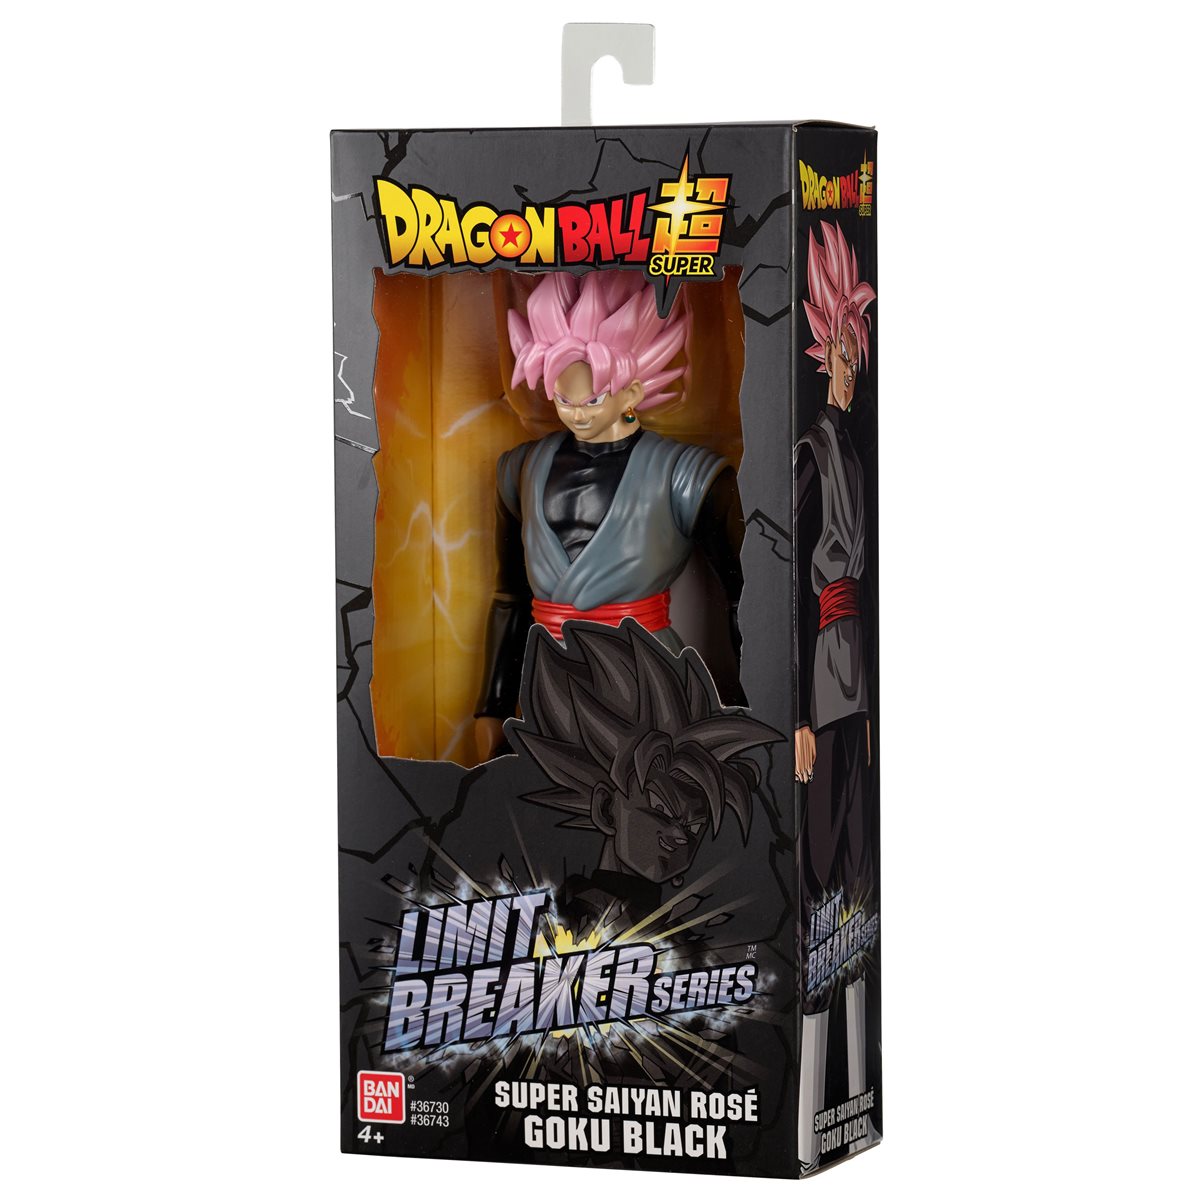 Dragonball Super Limit Breaker Goku Black Rose 12 Action Figure